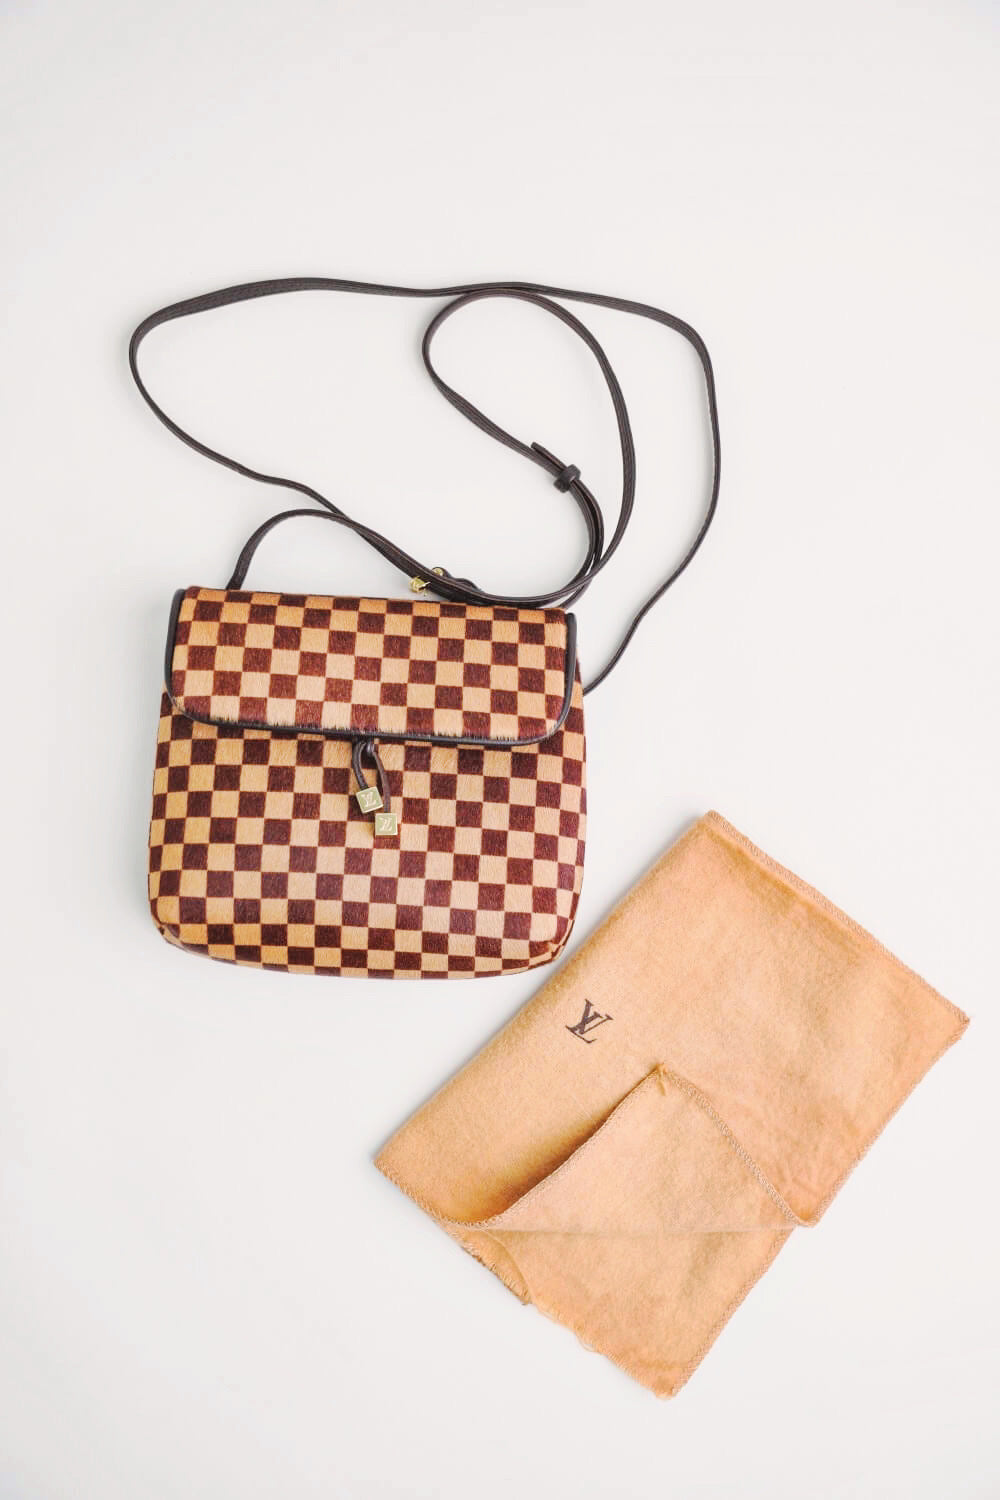 Louis Vuitton DAMIER GRAPHITE Other Plaid Patterns 2WAY Leather Messenger &  Shoulder Bags